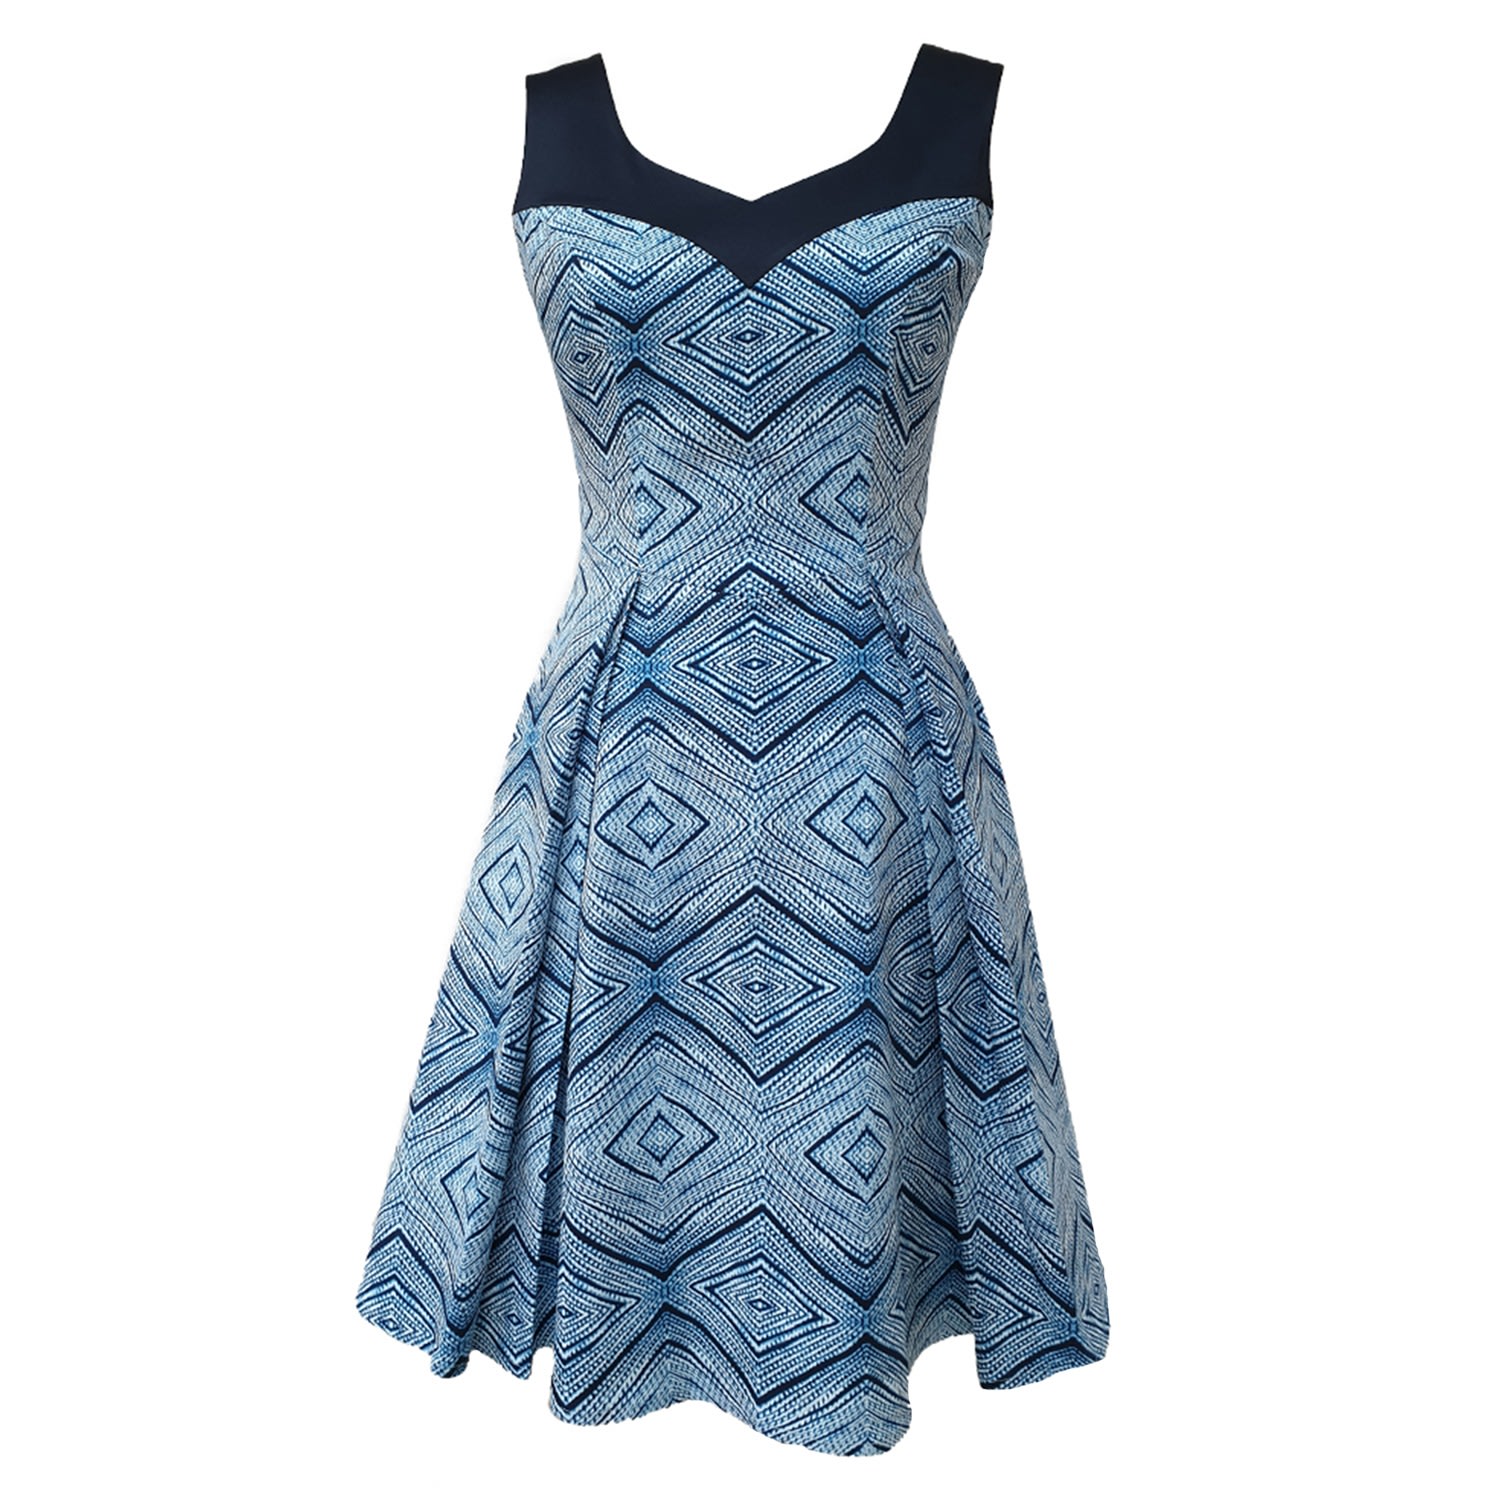 Mellaris Women's Evie Blue Dress In Topaz Print Cotton